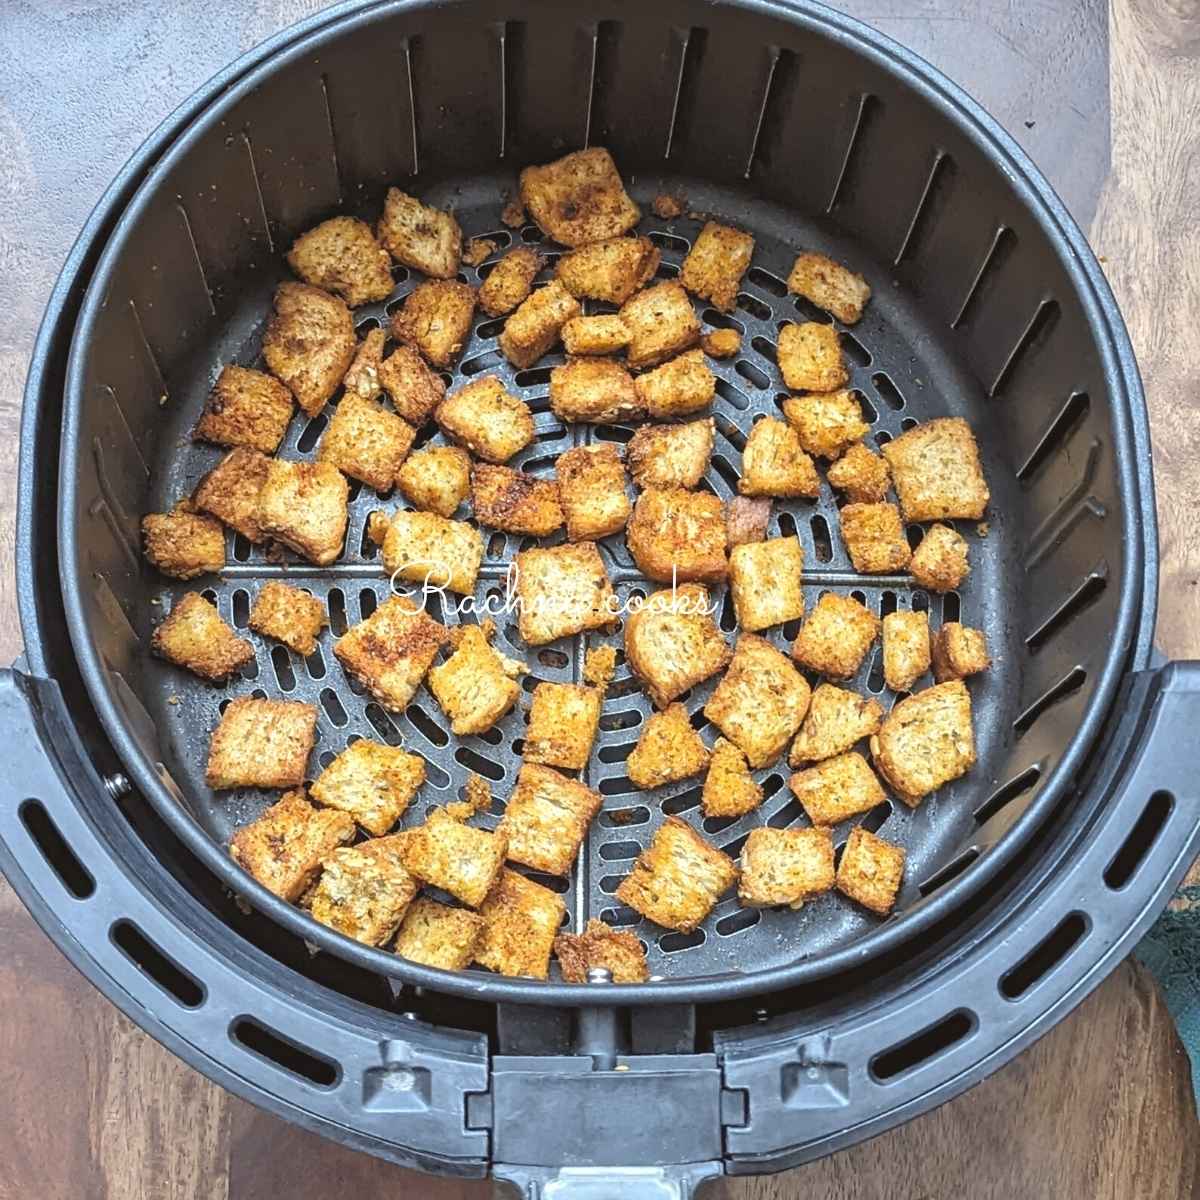 golden crispy air fryer croutons in air fryer basket.